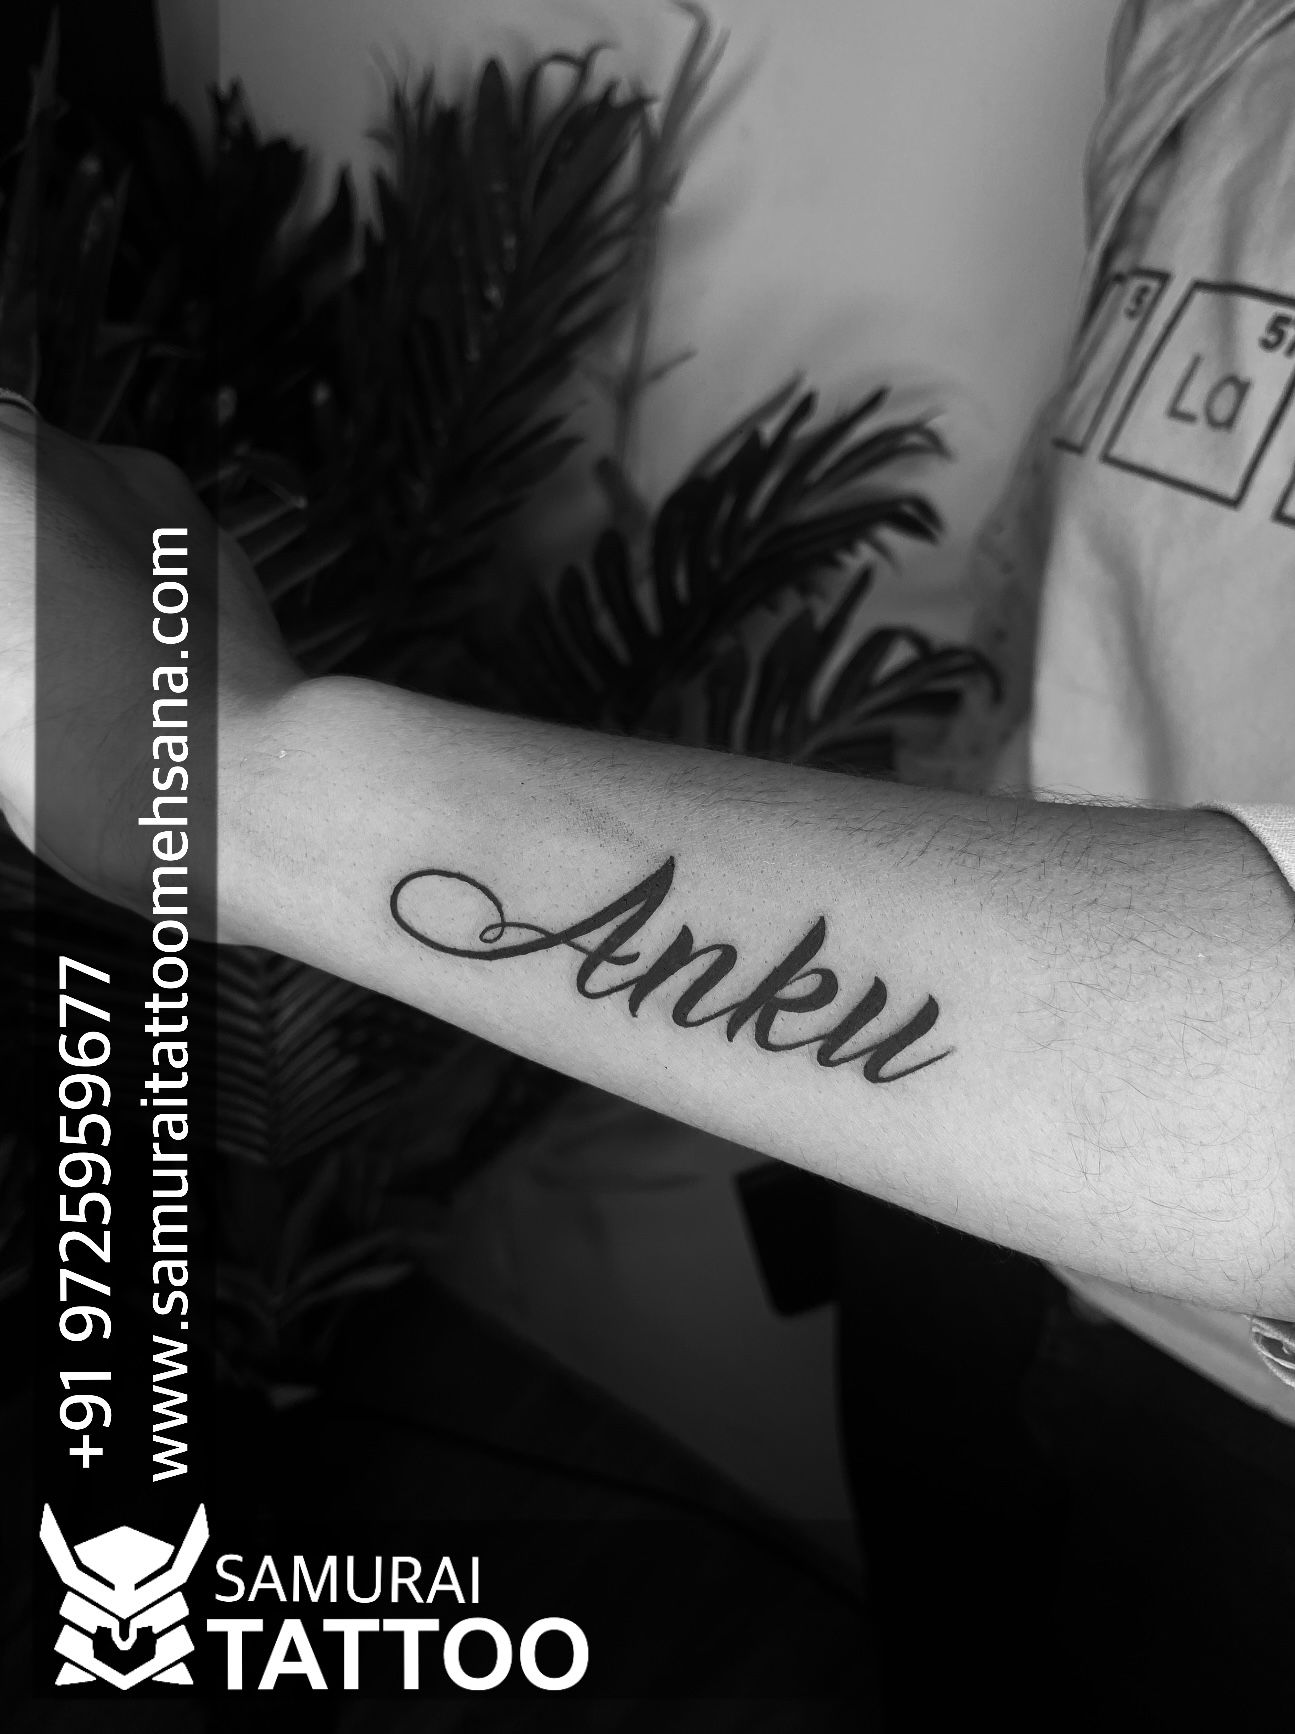 Tattoo Sona Arte - tattoo photo (1036430)